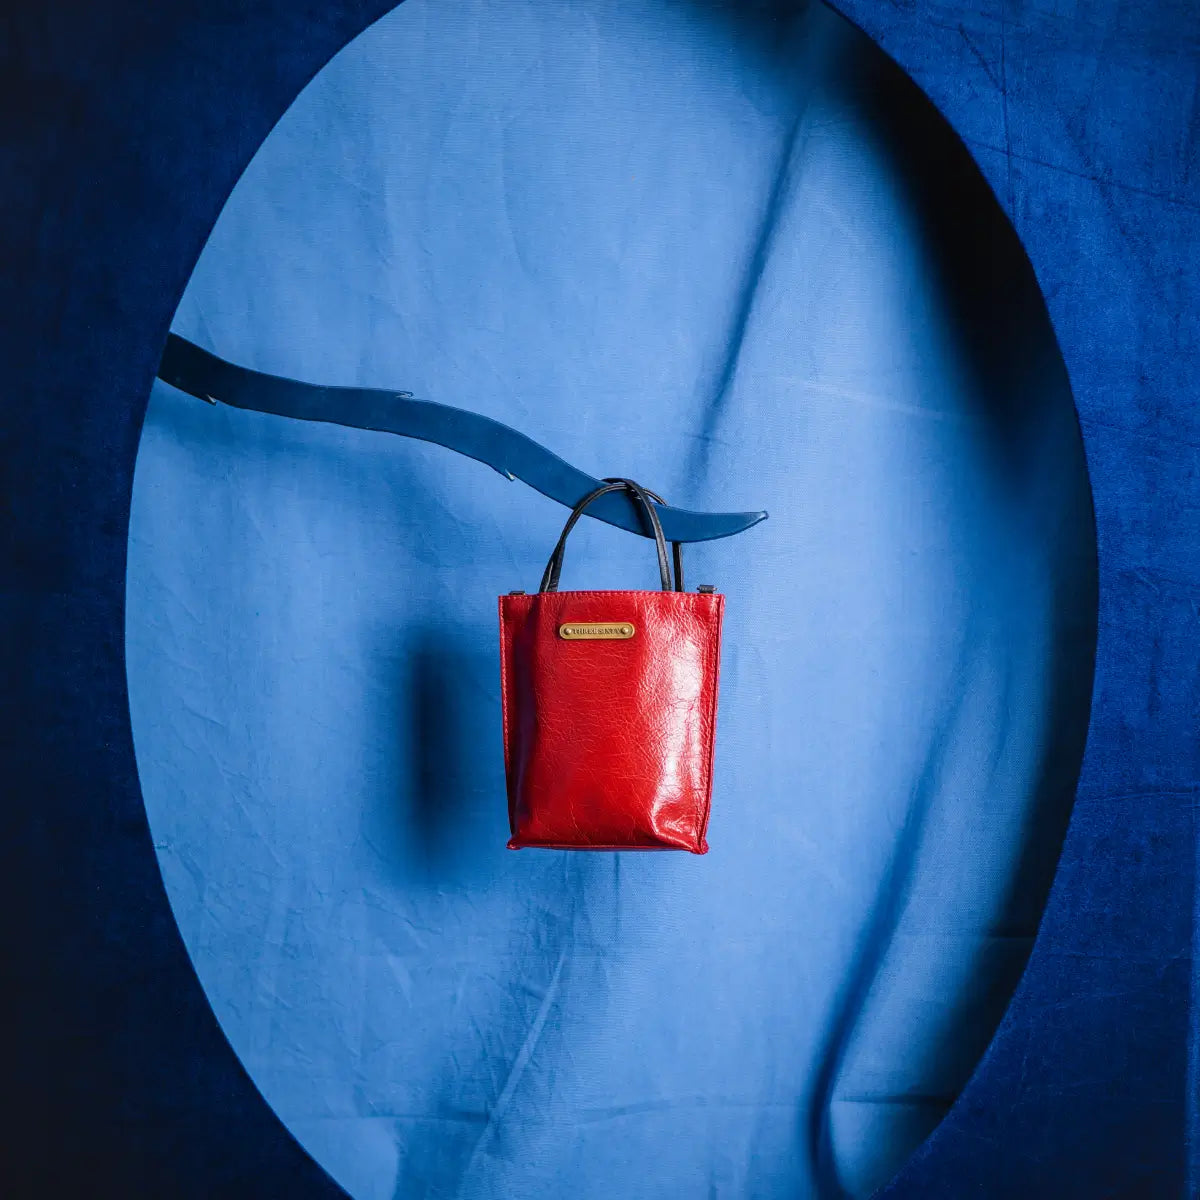 Genuine Leather Handbags | Boho Chic Handbags for Sale